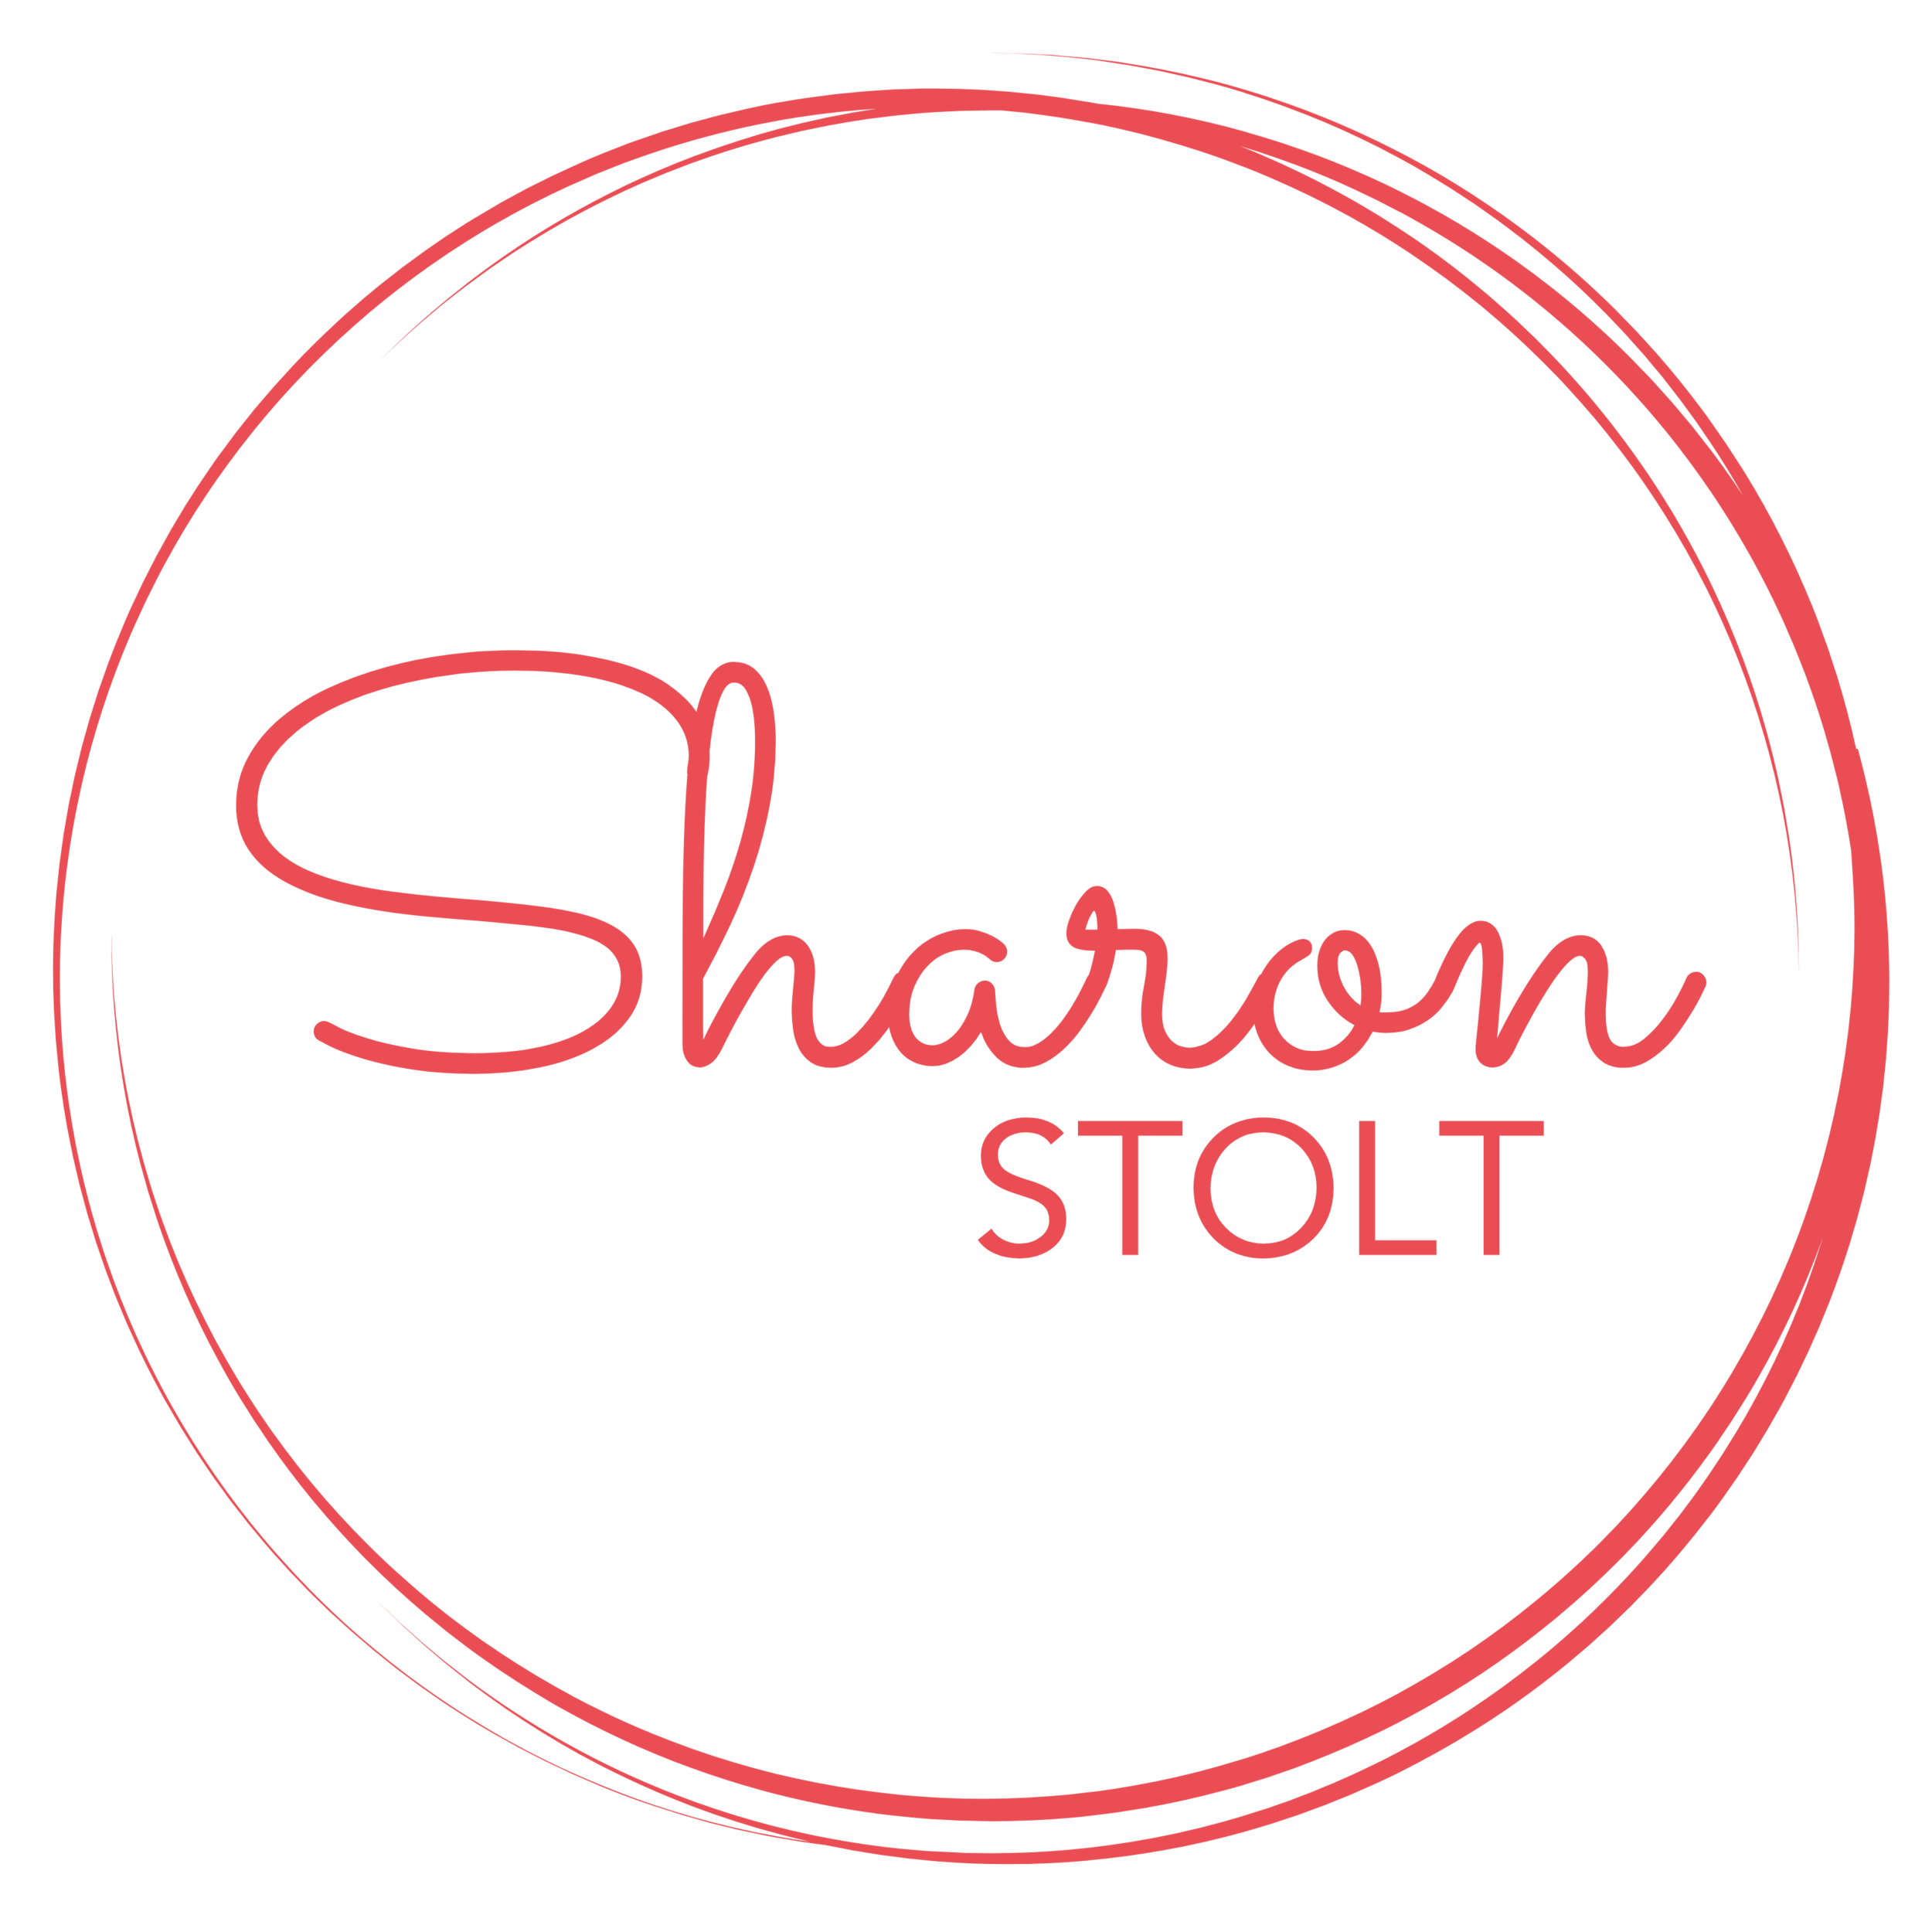 Sharon Stolt